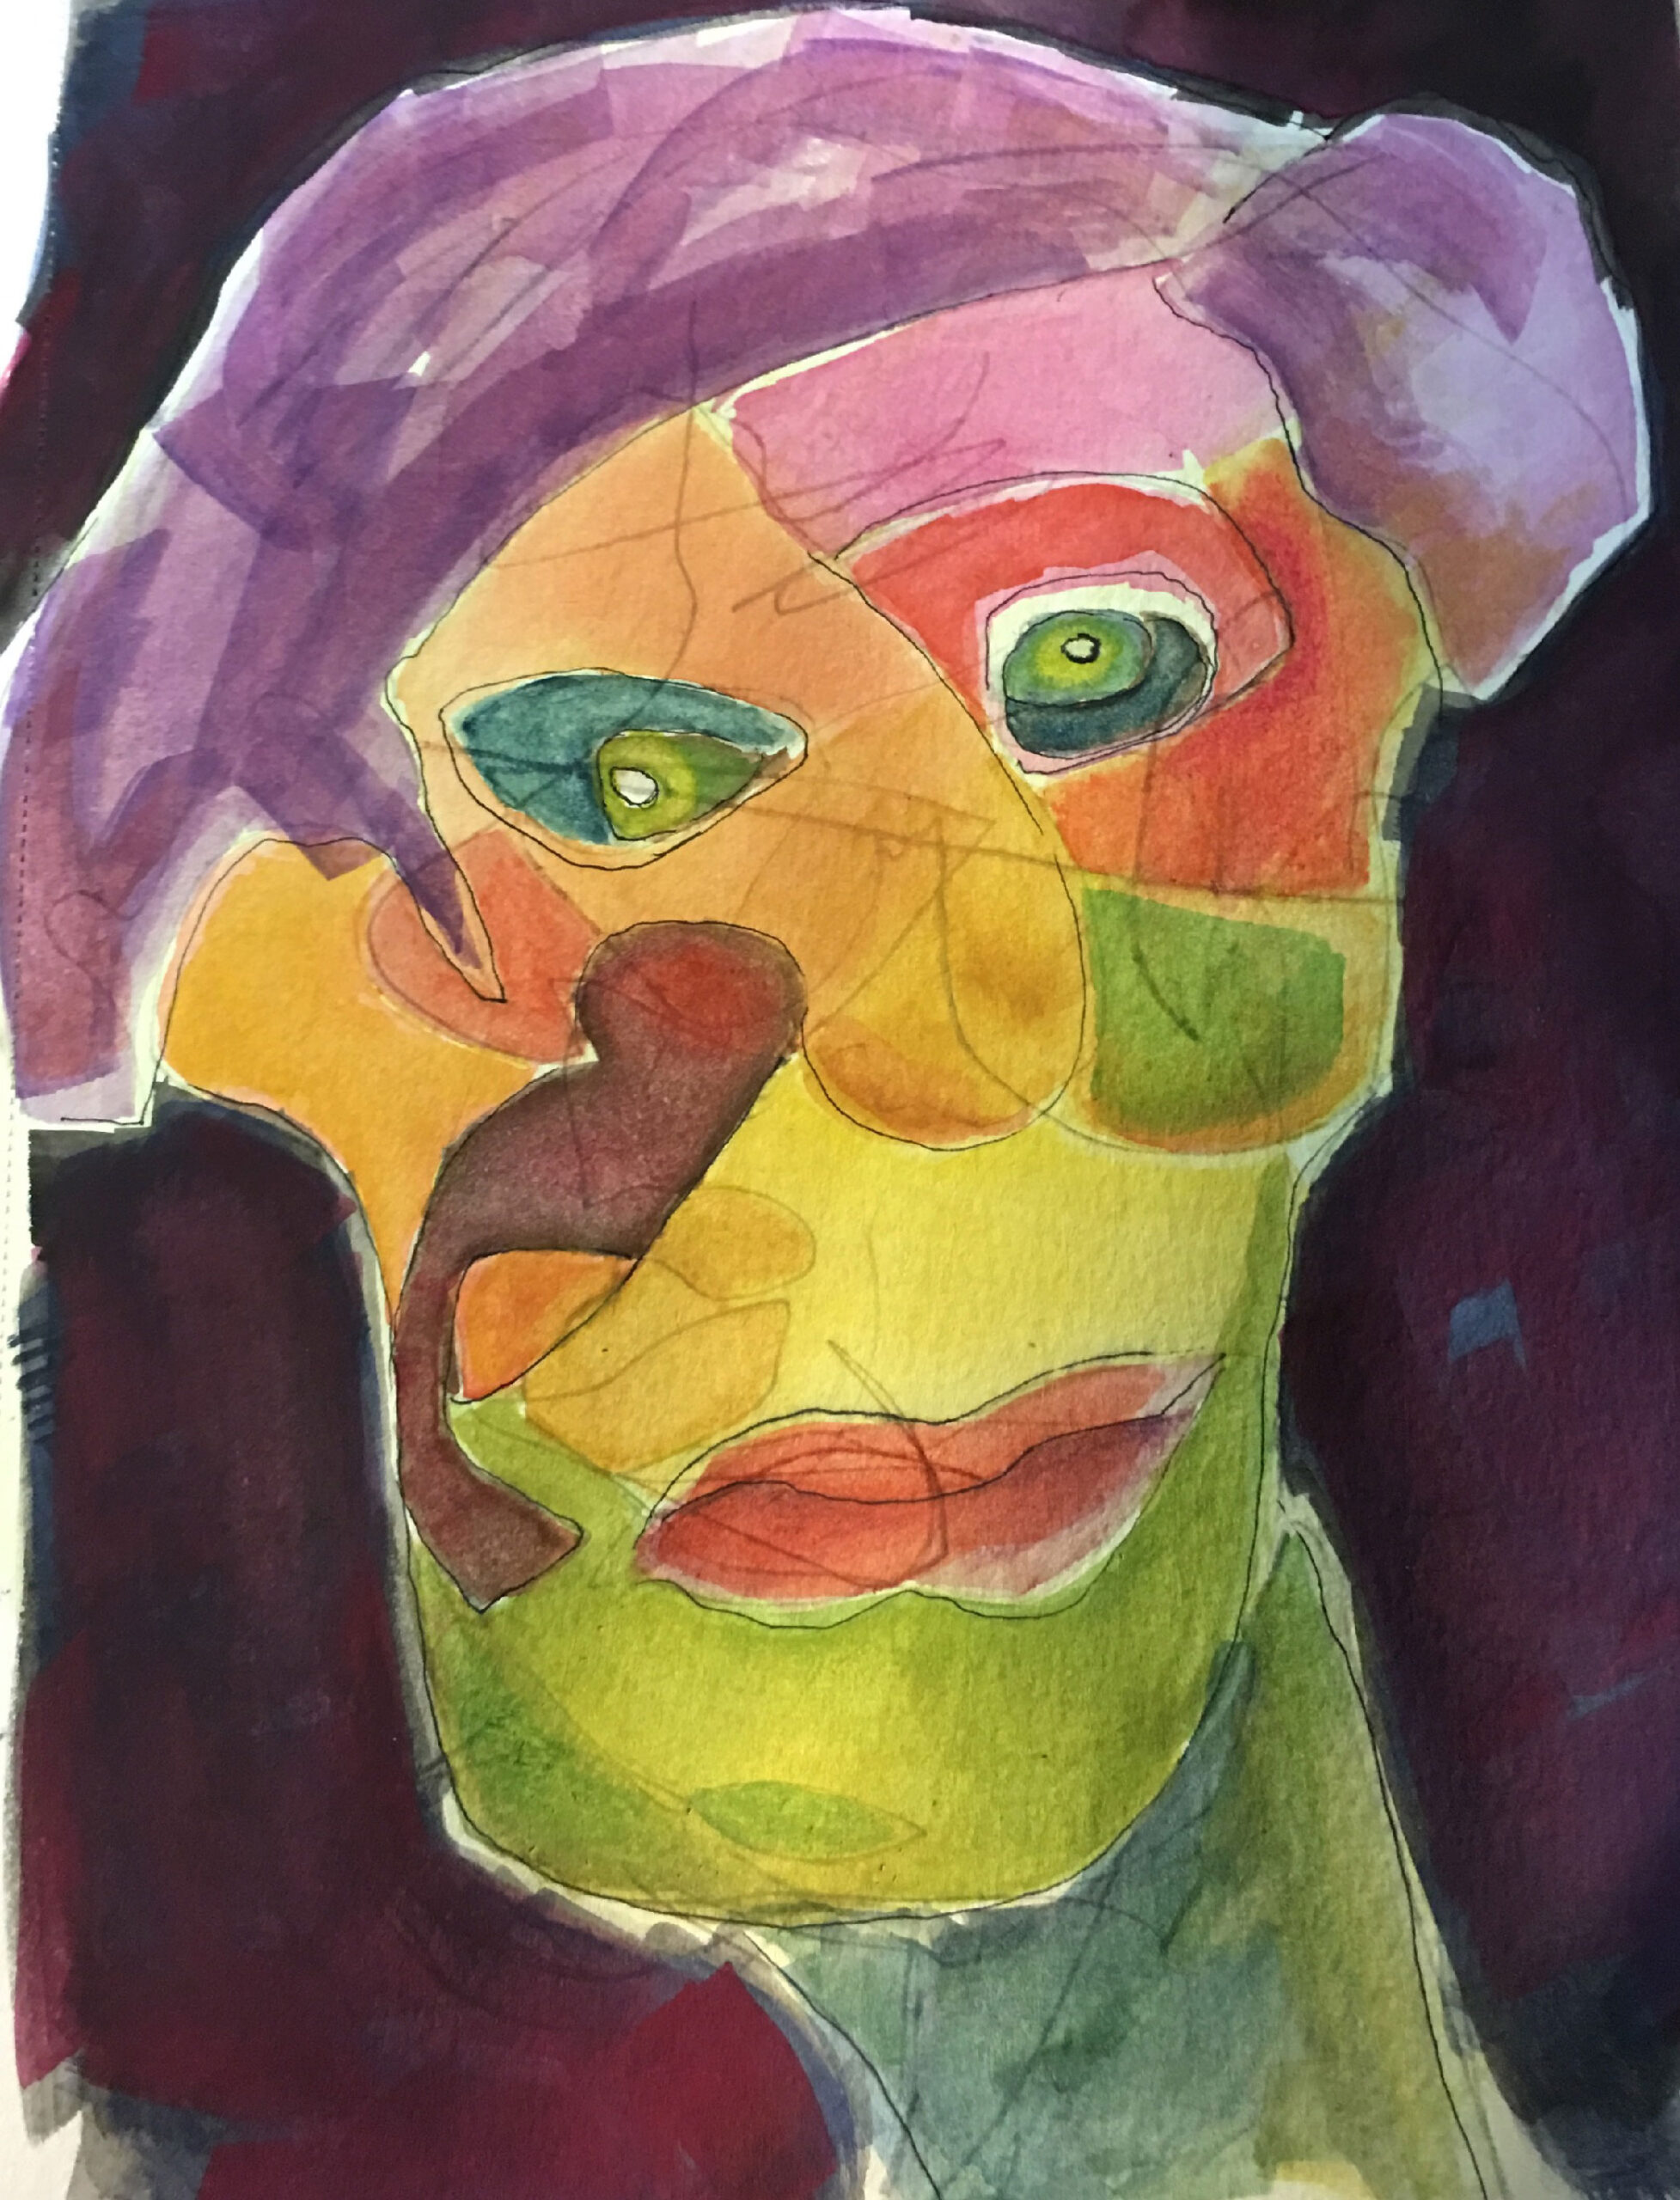 Colourful watercolour and pencil sketch portrait